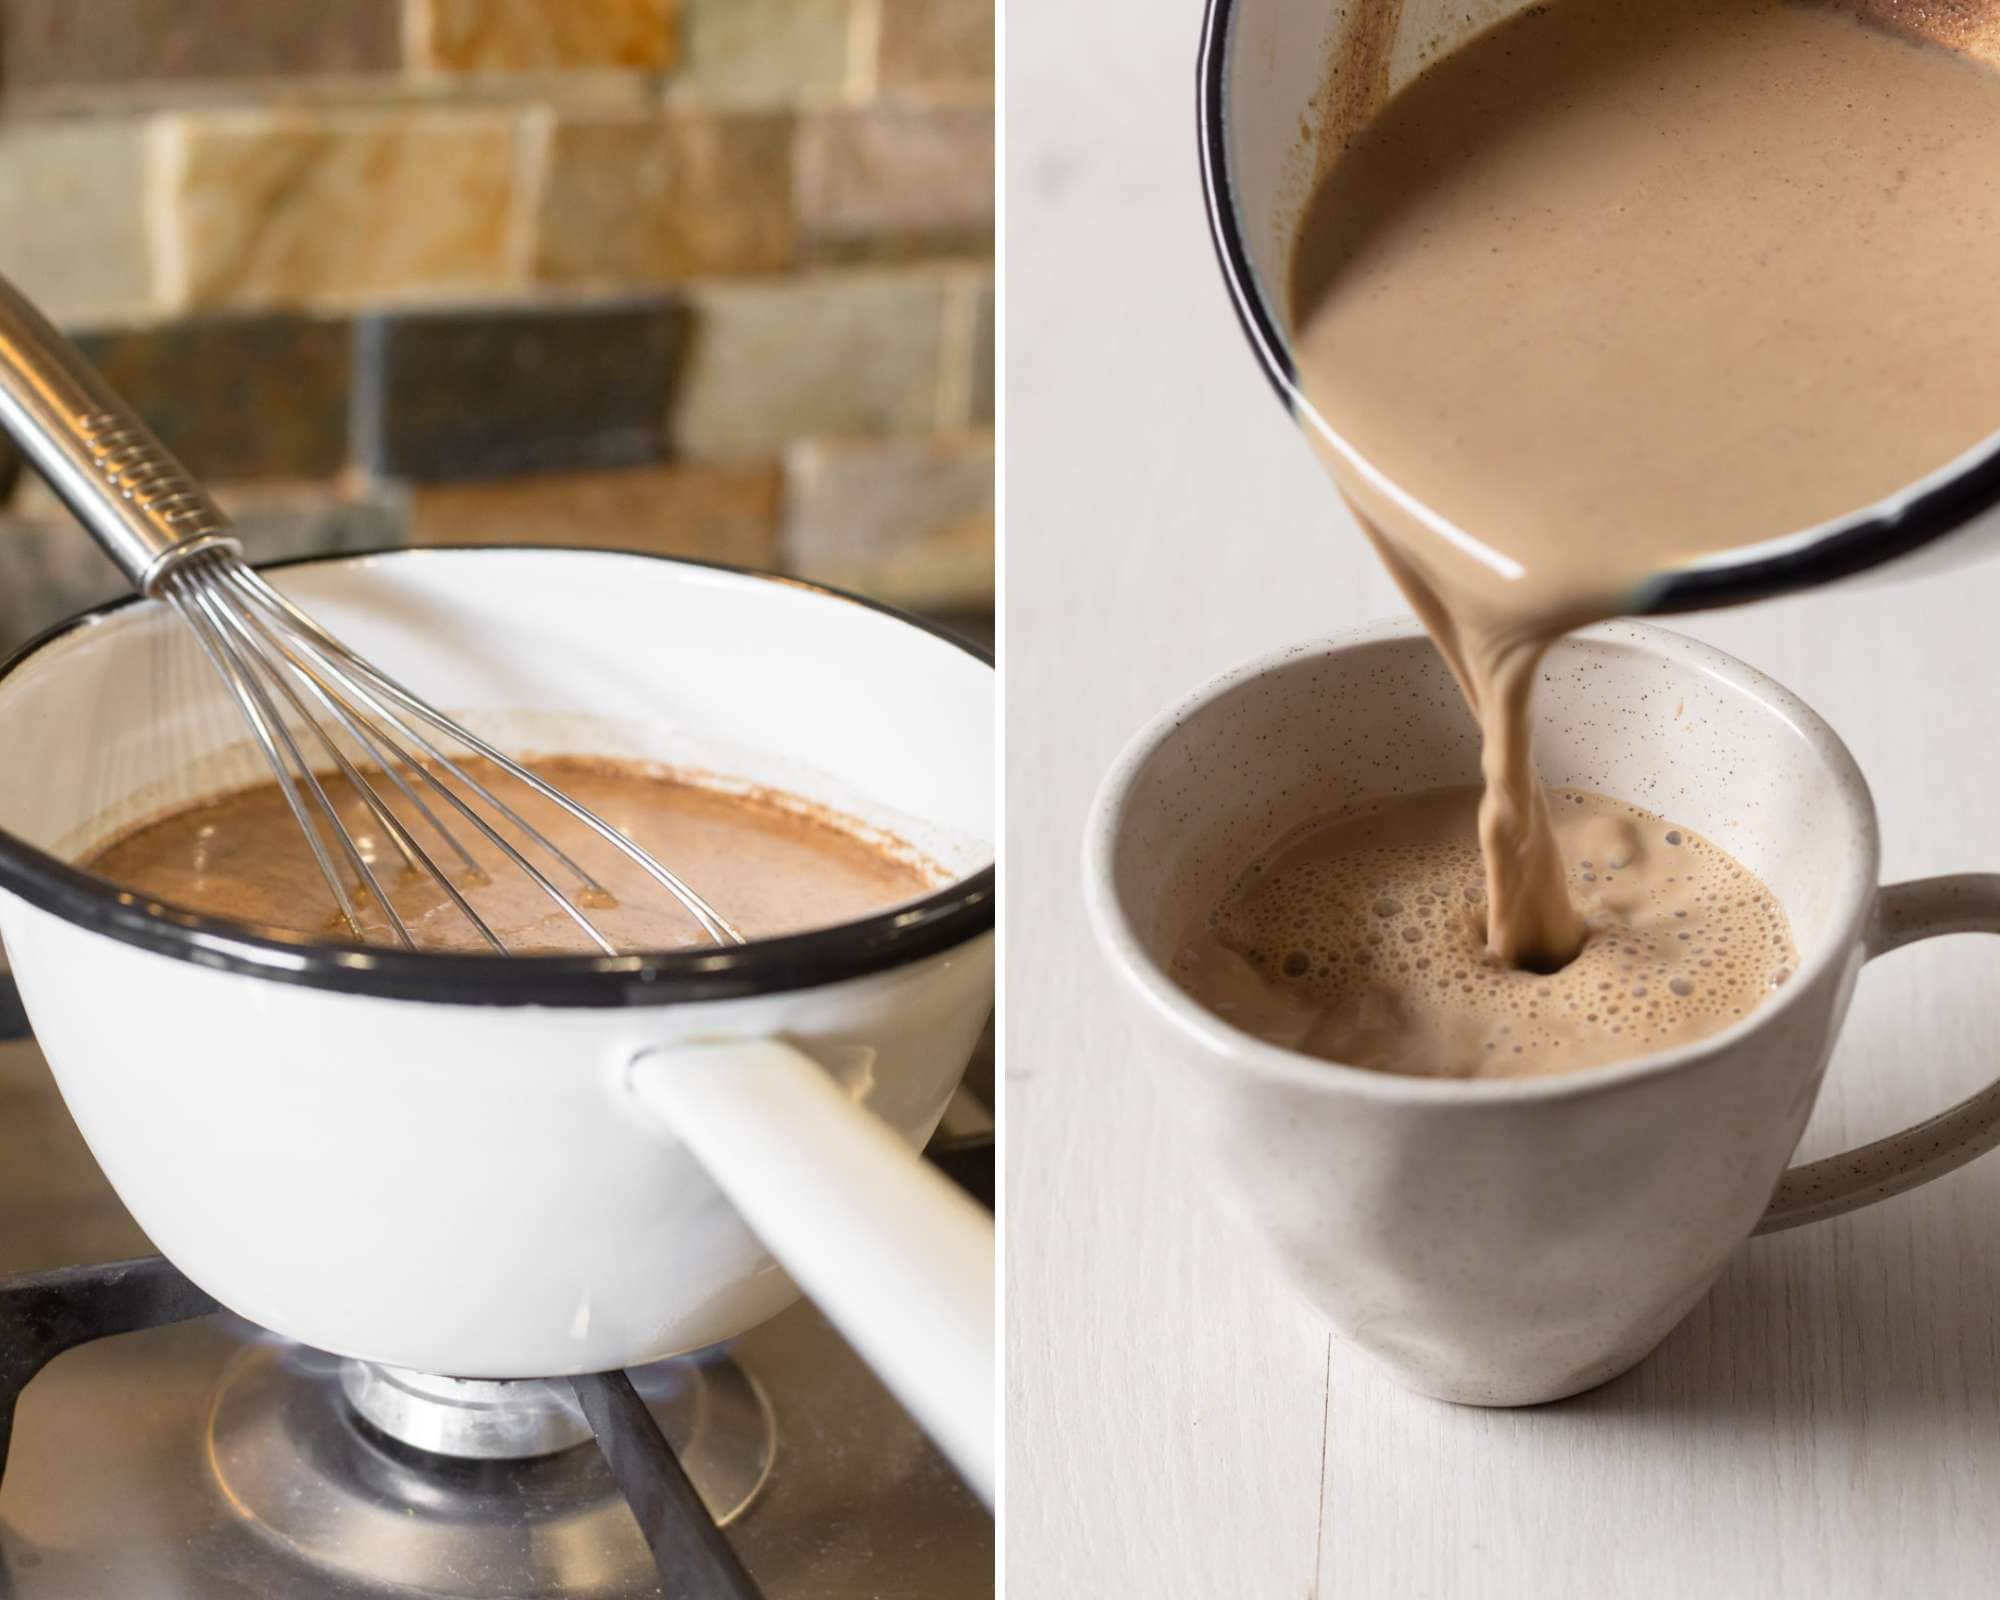 Gingerbread latte in saucepan on stovetop.